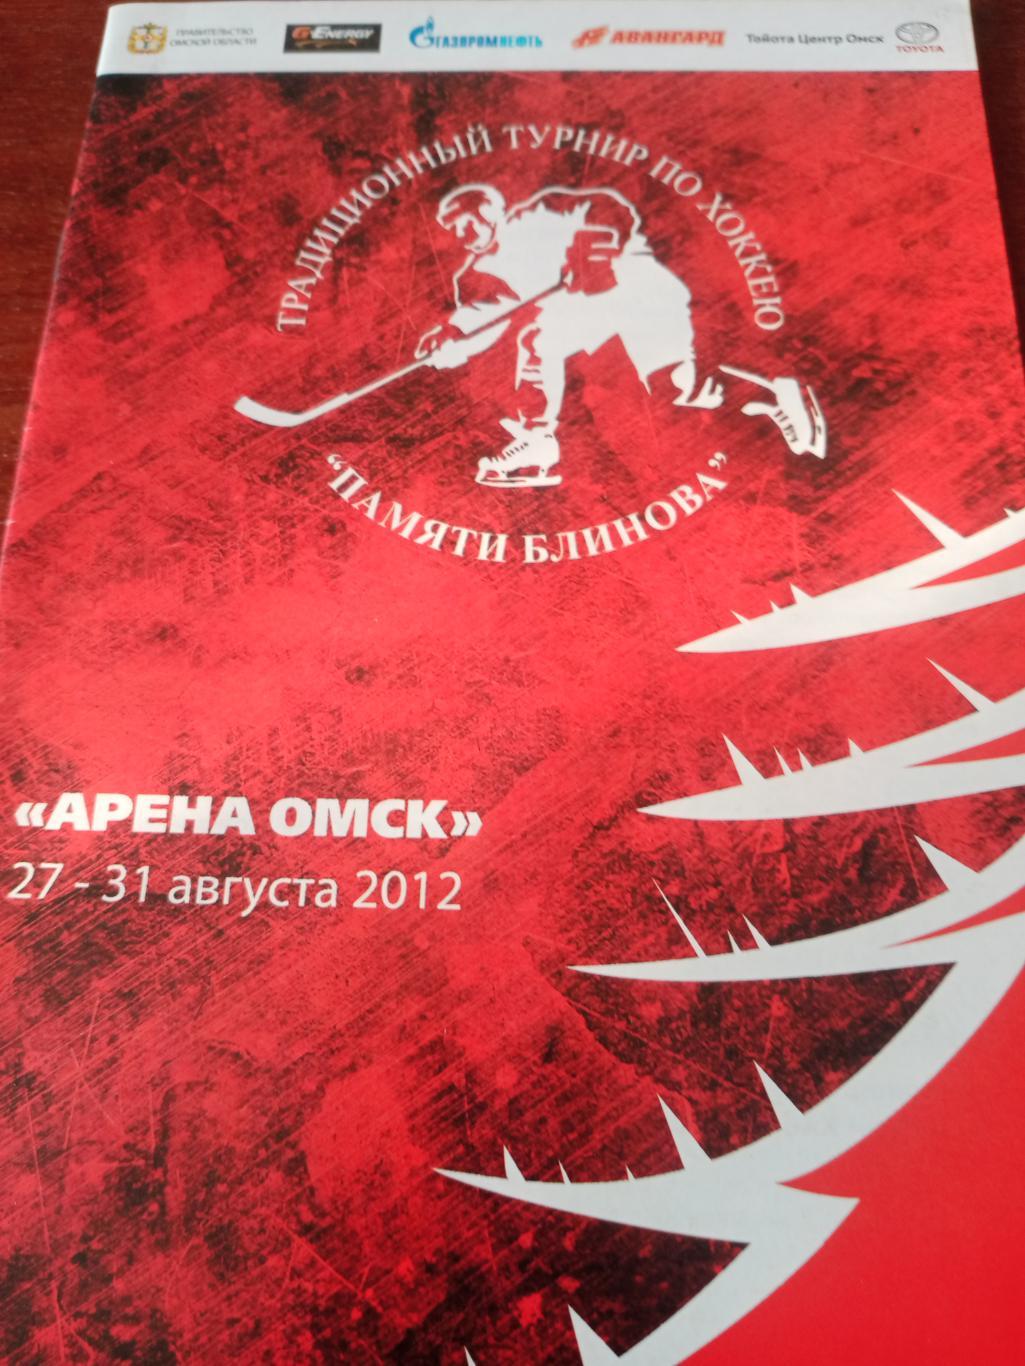 26 мемориал Виктора Блинова. Омск. 27 - 31 августа 2012 год